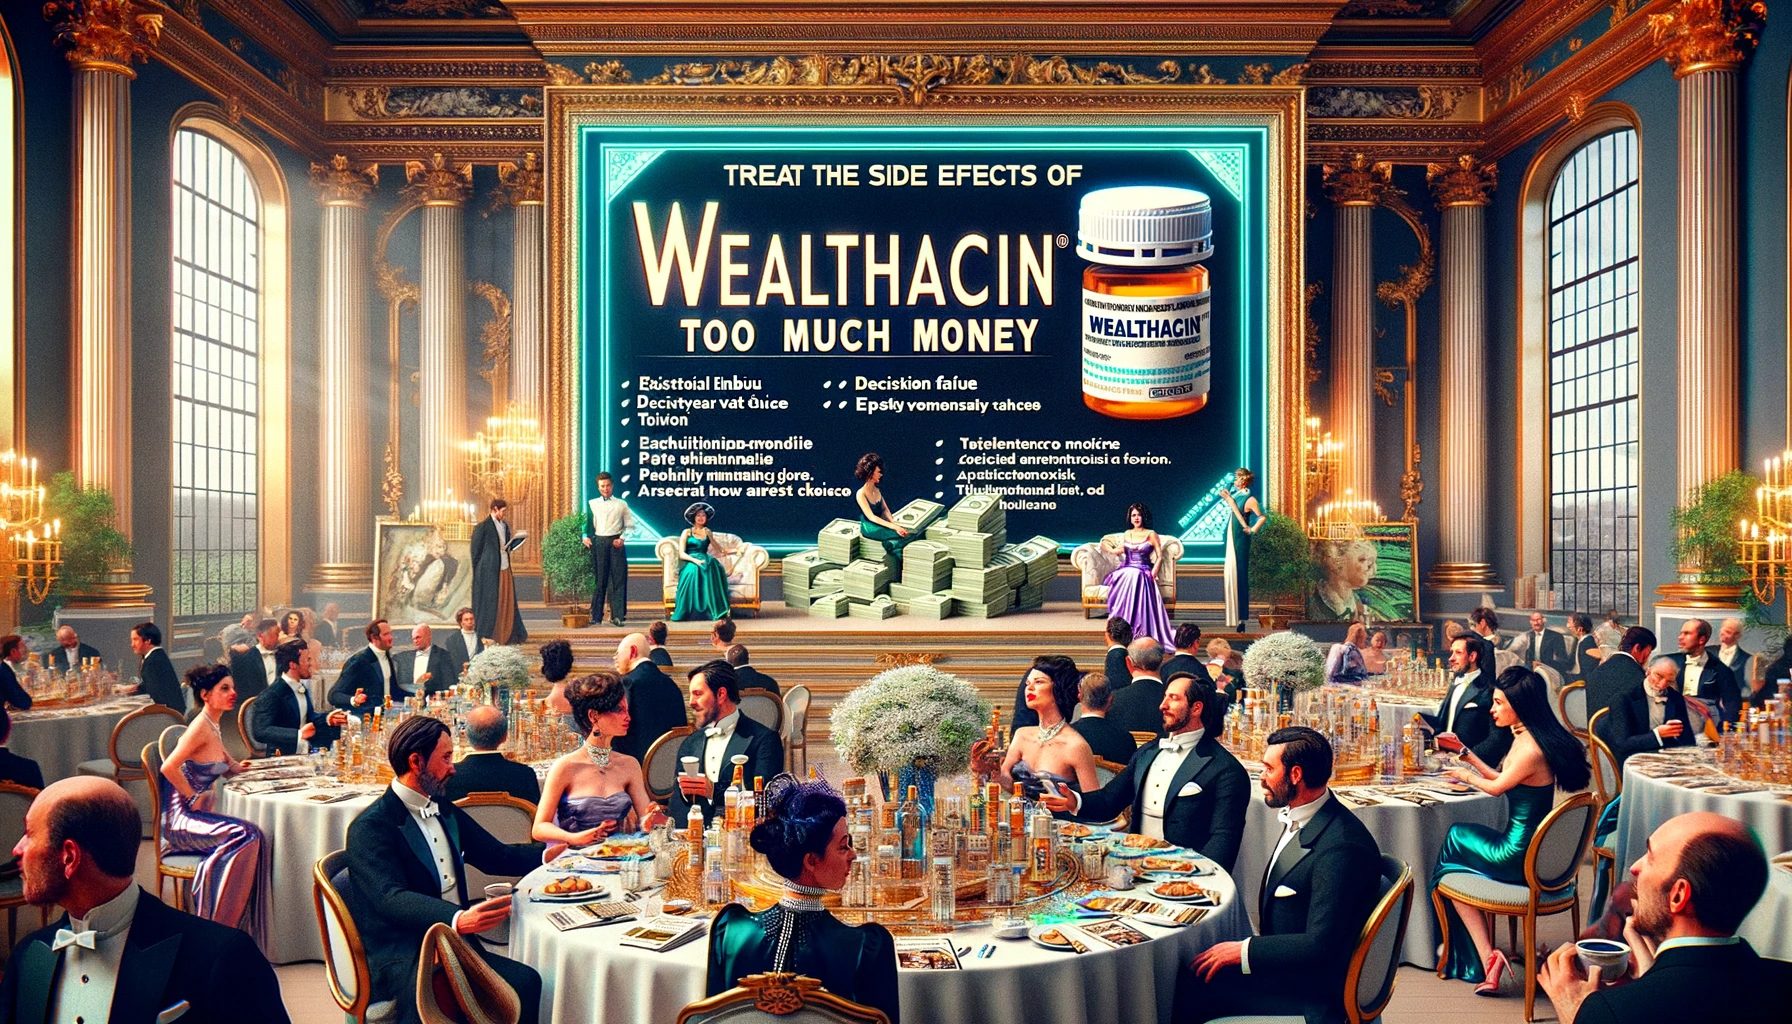 wealthacin-new-drug-for-the-super-wealthy-csdn